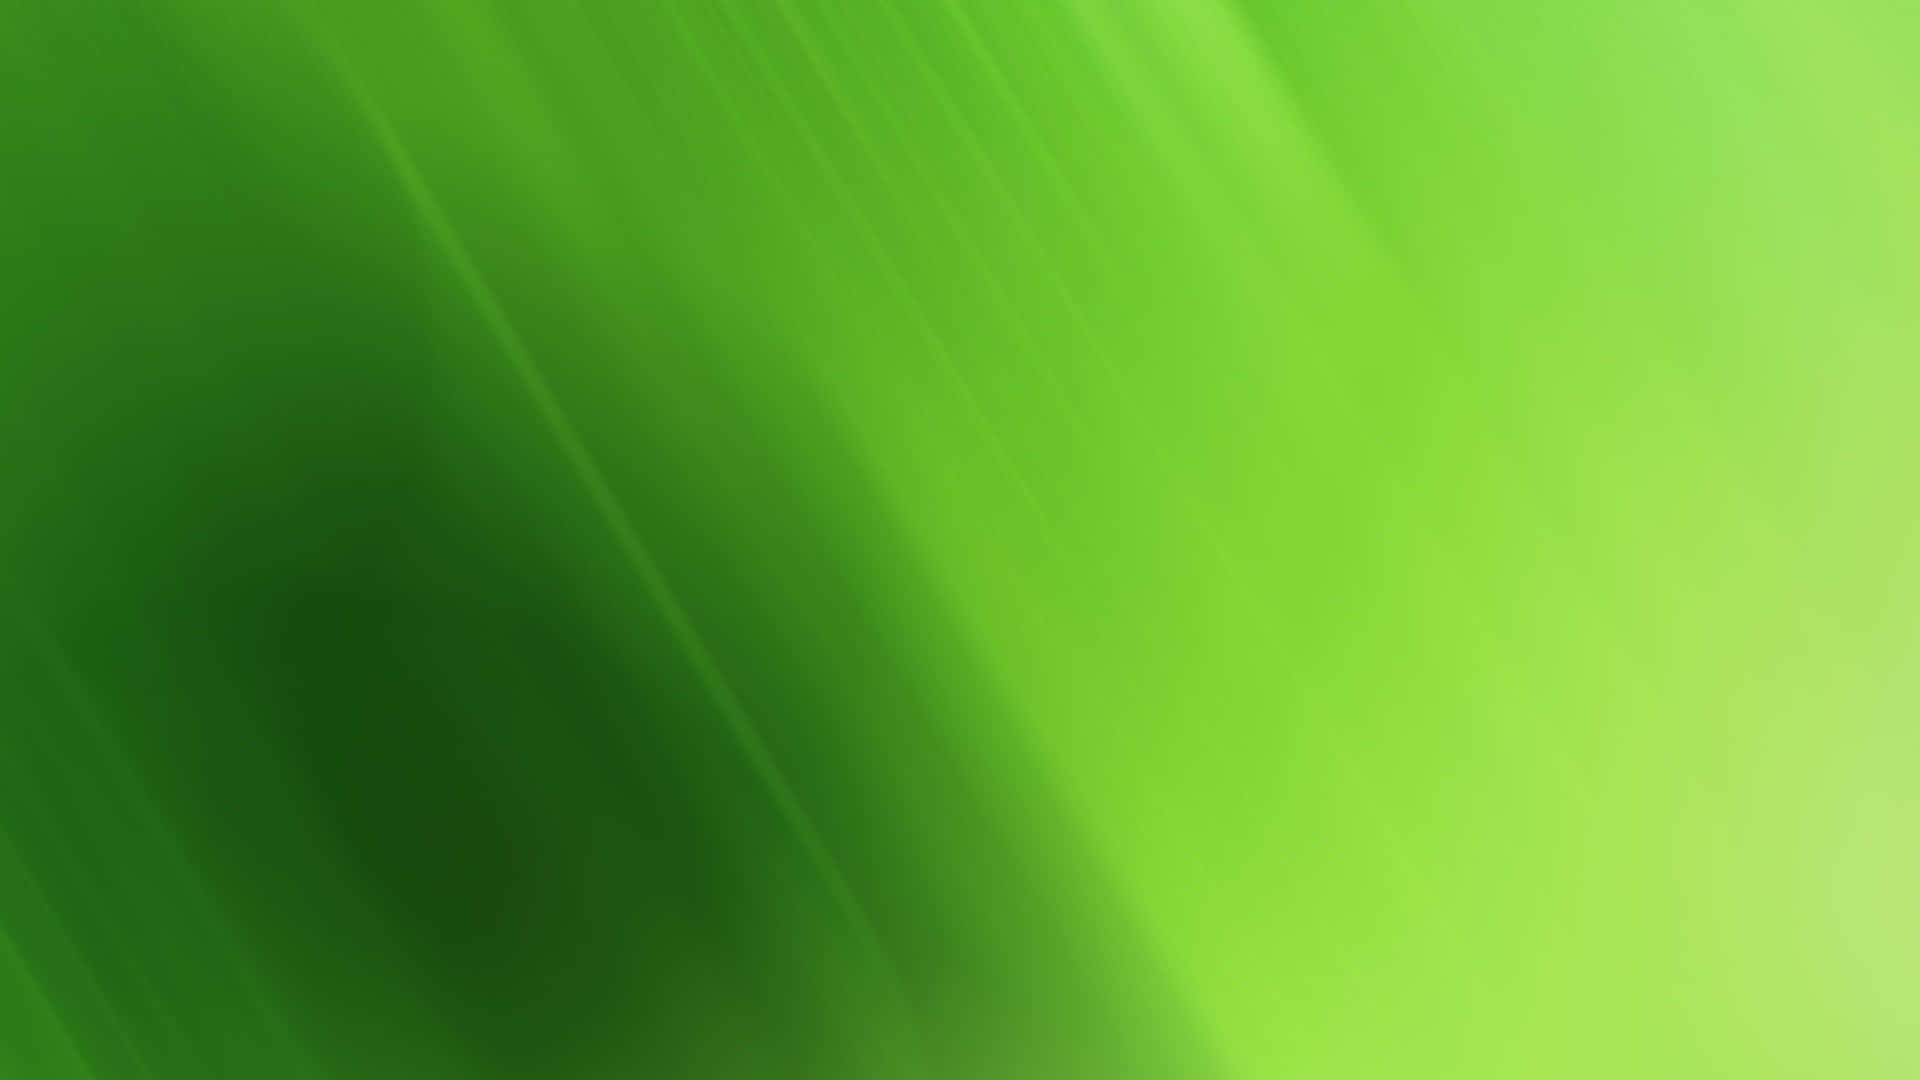 Simple Yet Elegant - Solid Green Background